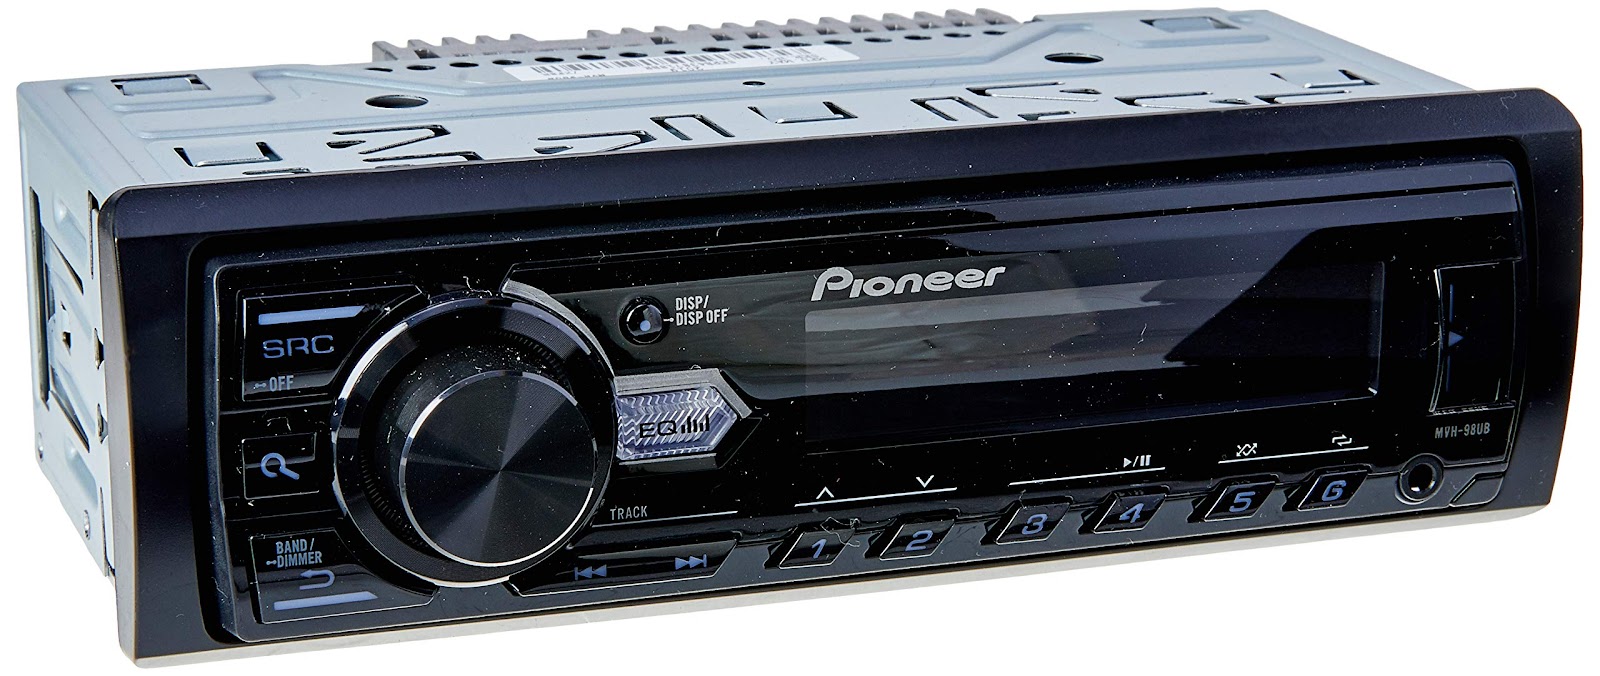 Som Automotivo Pioneer Media Receiver MVH-98UB MP3 USB RCA